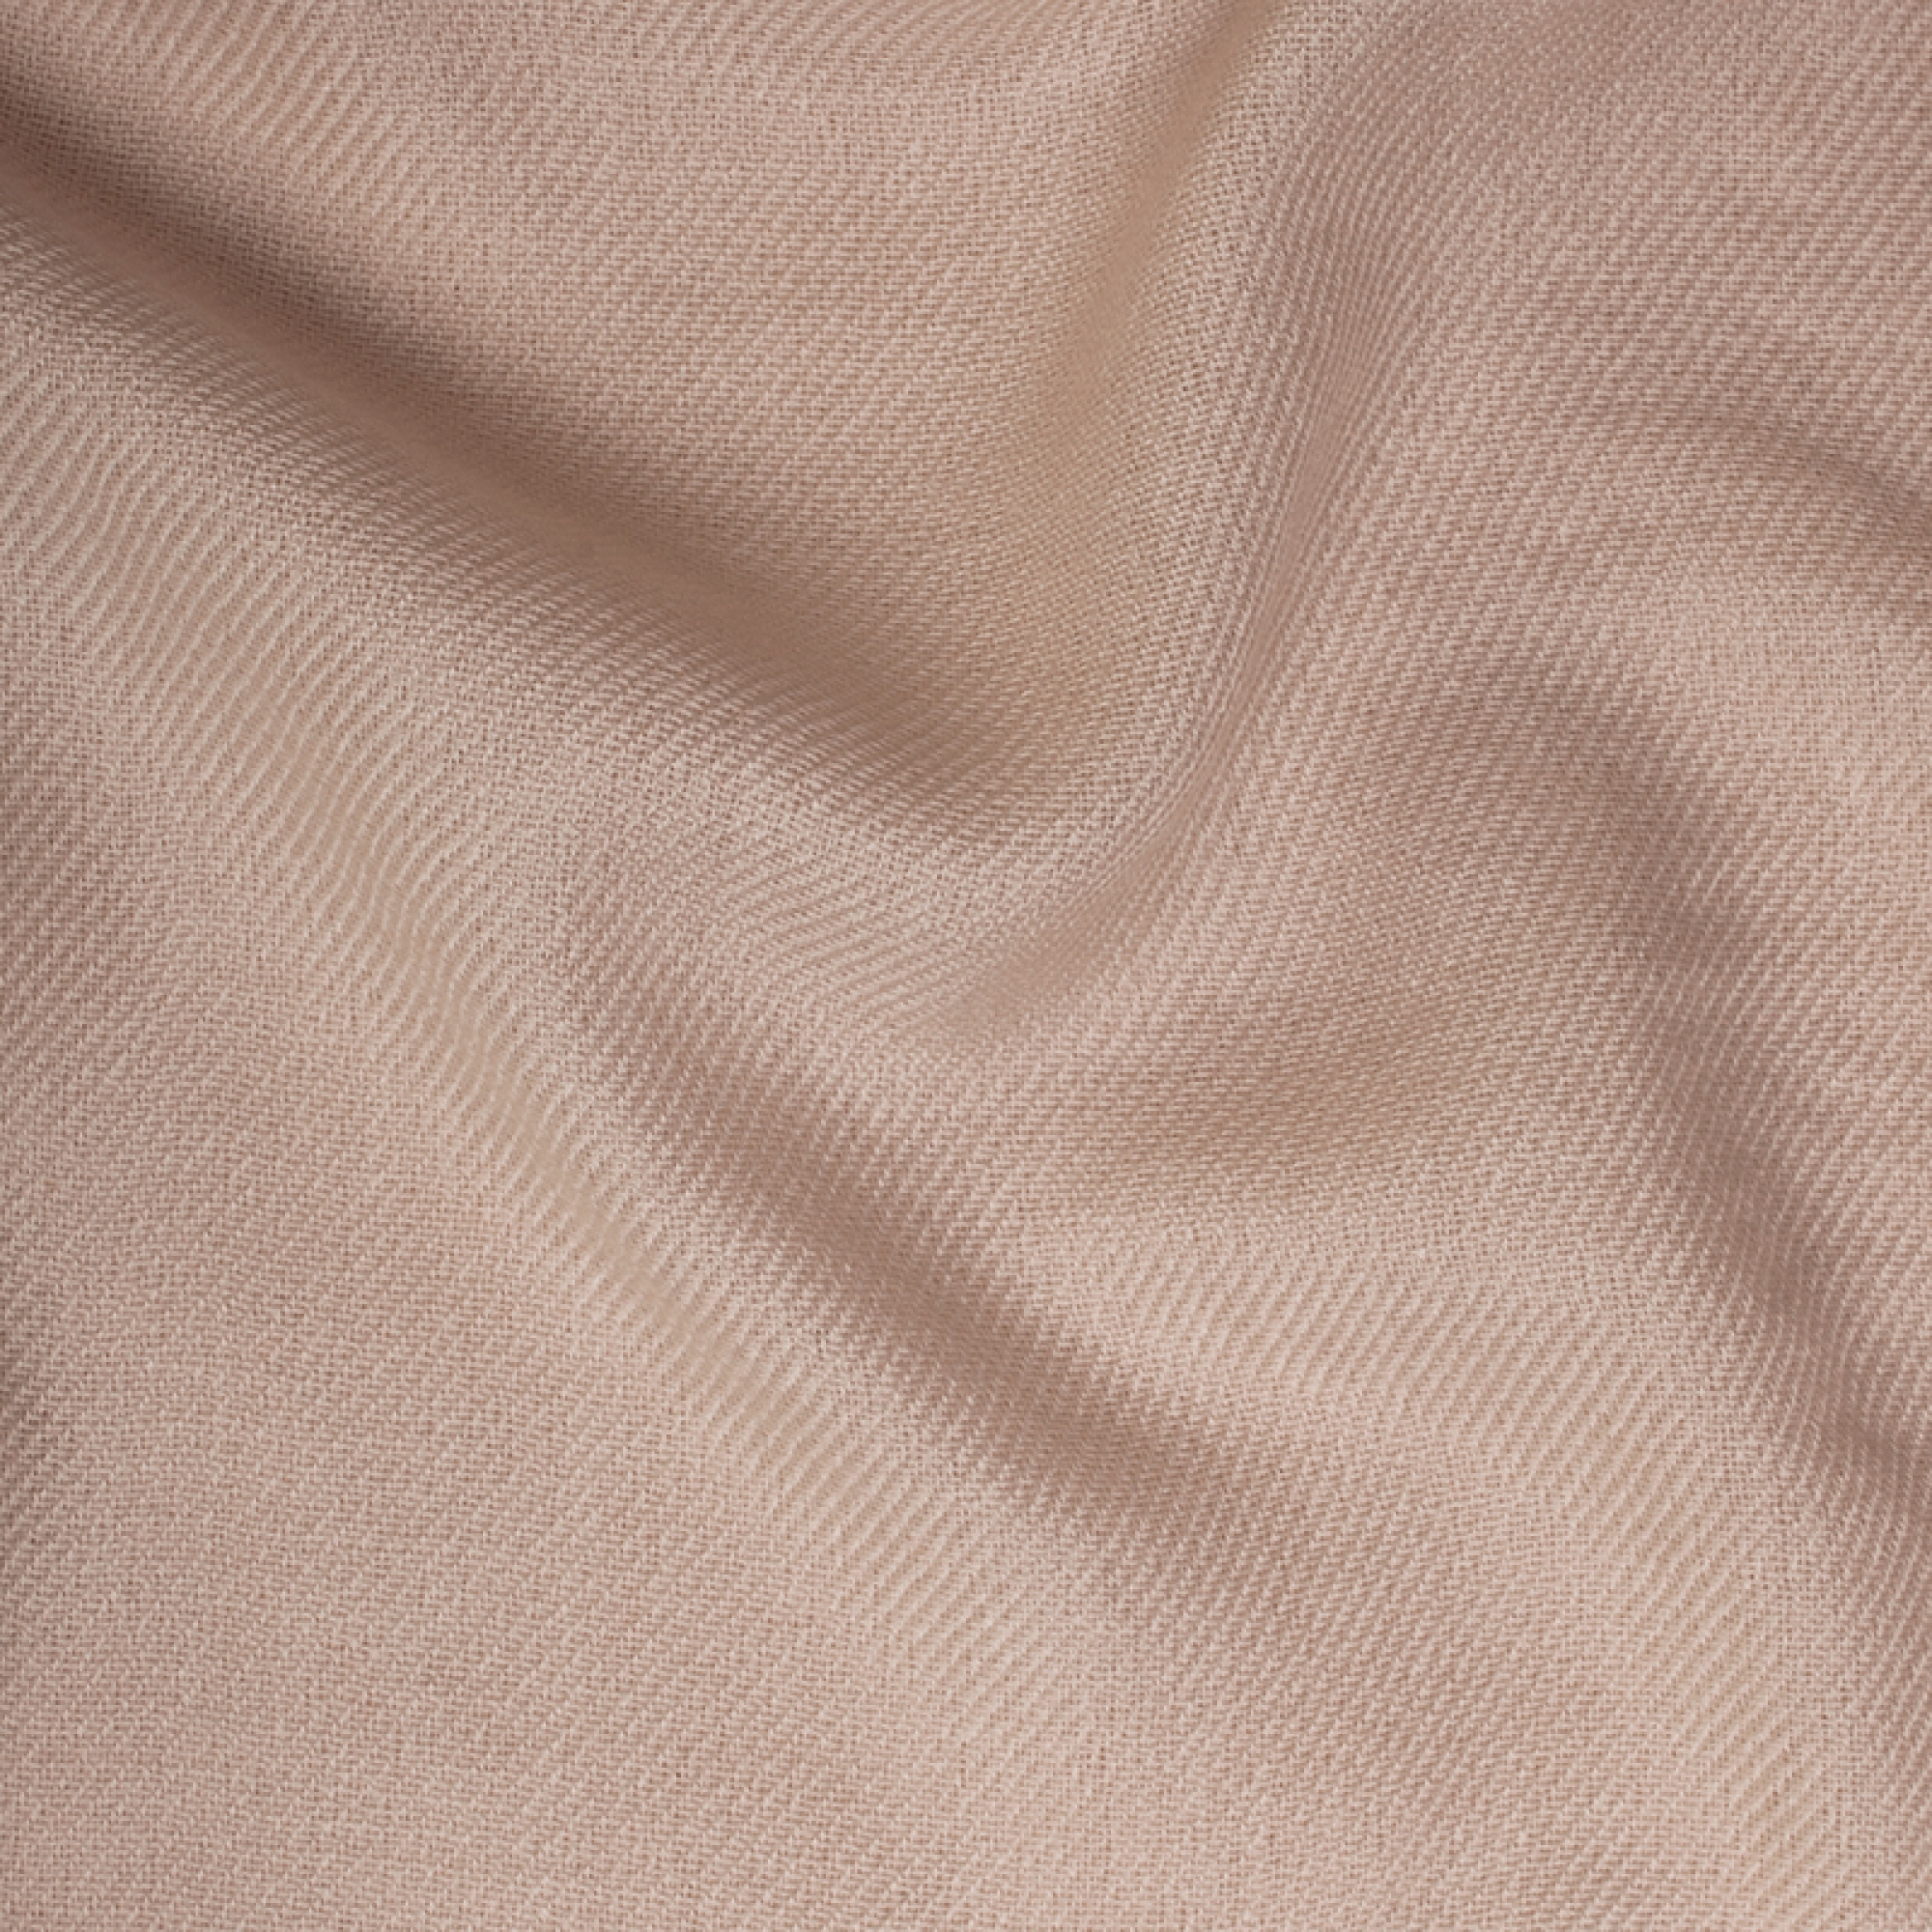 Cashmere accessories blanket toodoo plain m 180 x 220 crystal grey 180 x 220 cm